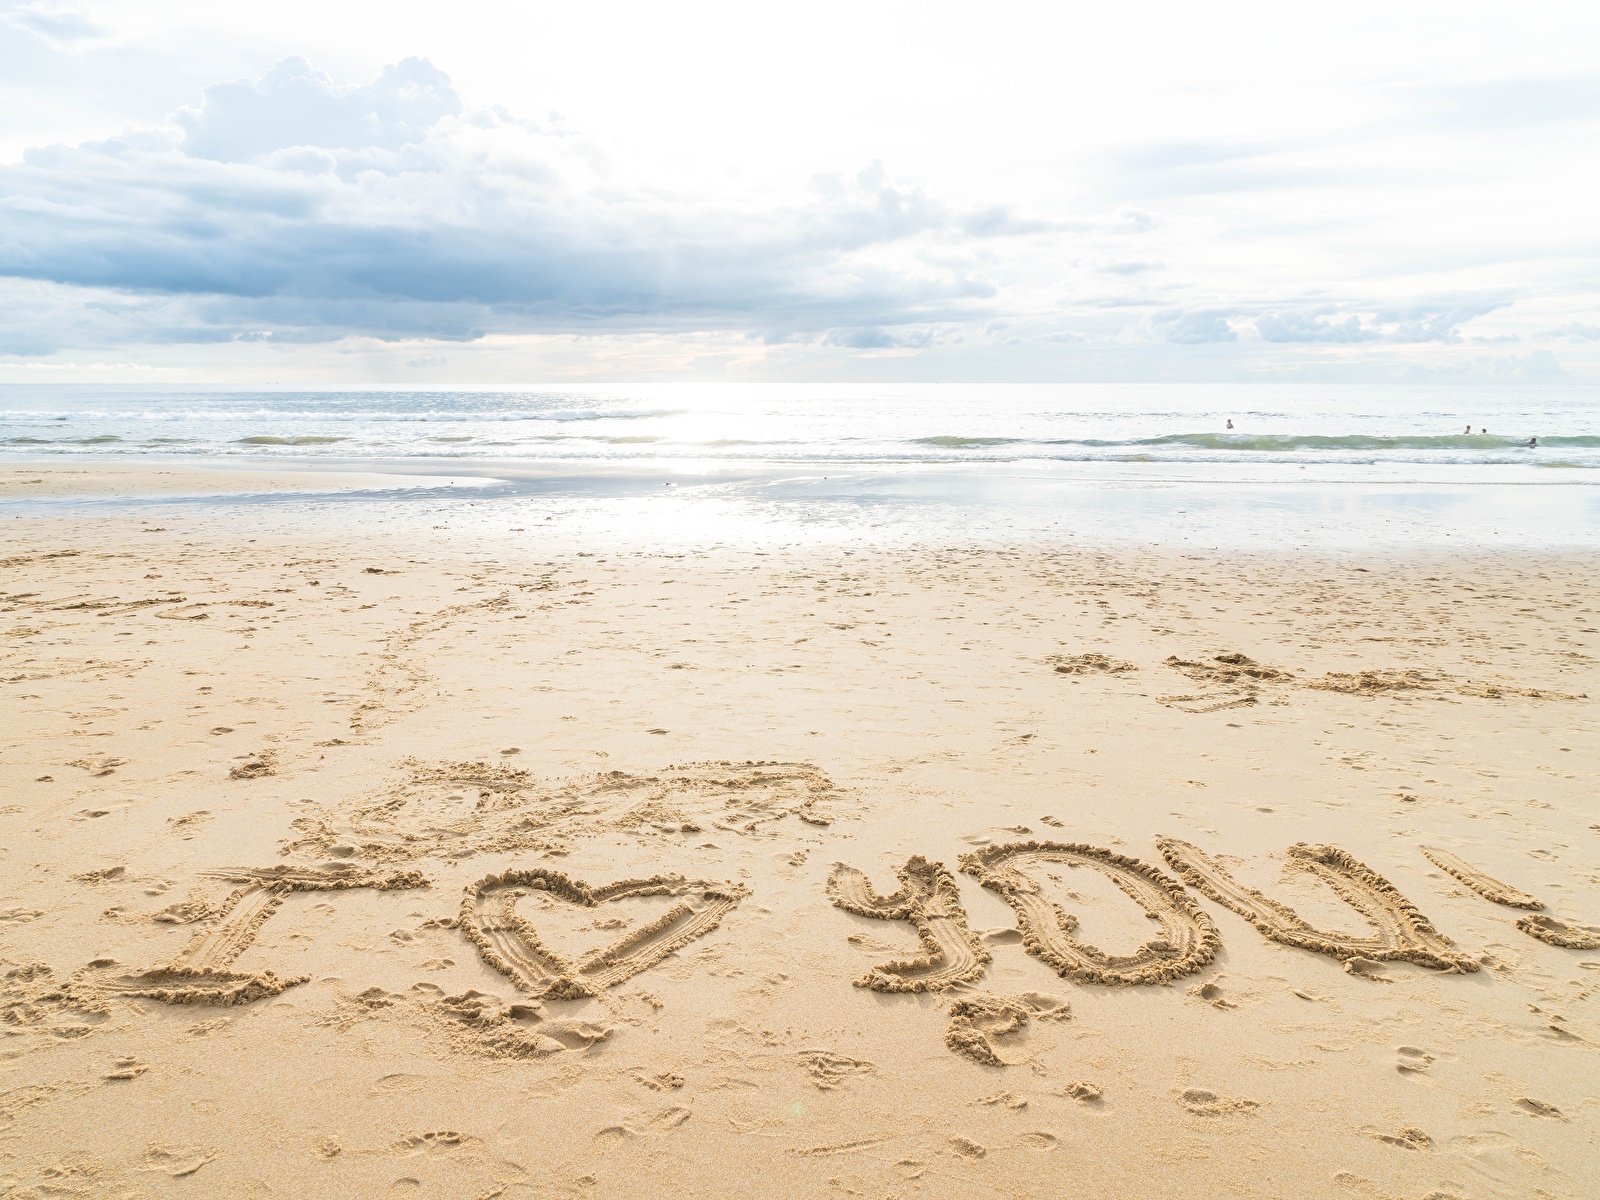 Картинка инглийские I love you пляжи Море Природа Песок Слово - Надпись 1600x1200 английская Английский Пляж пляжа пляже песка песке слова текст